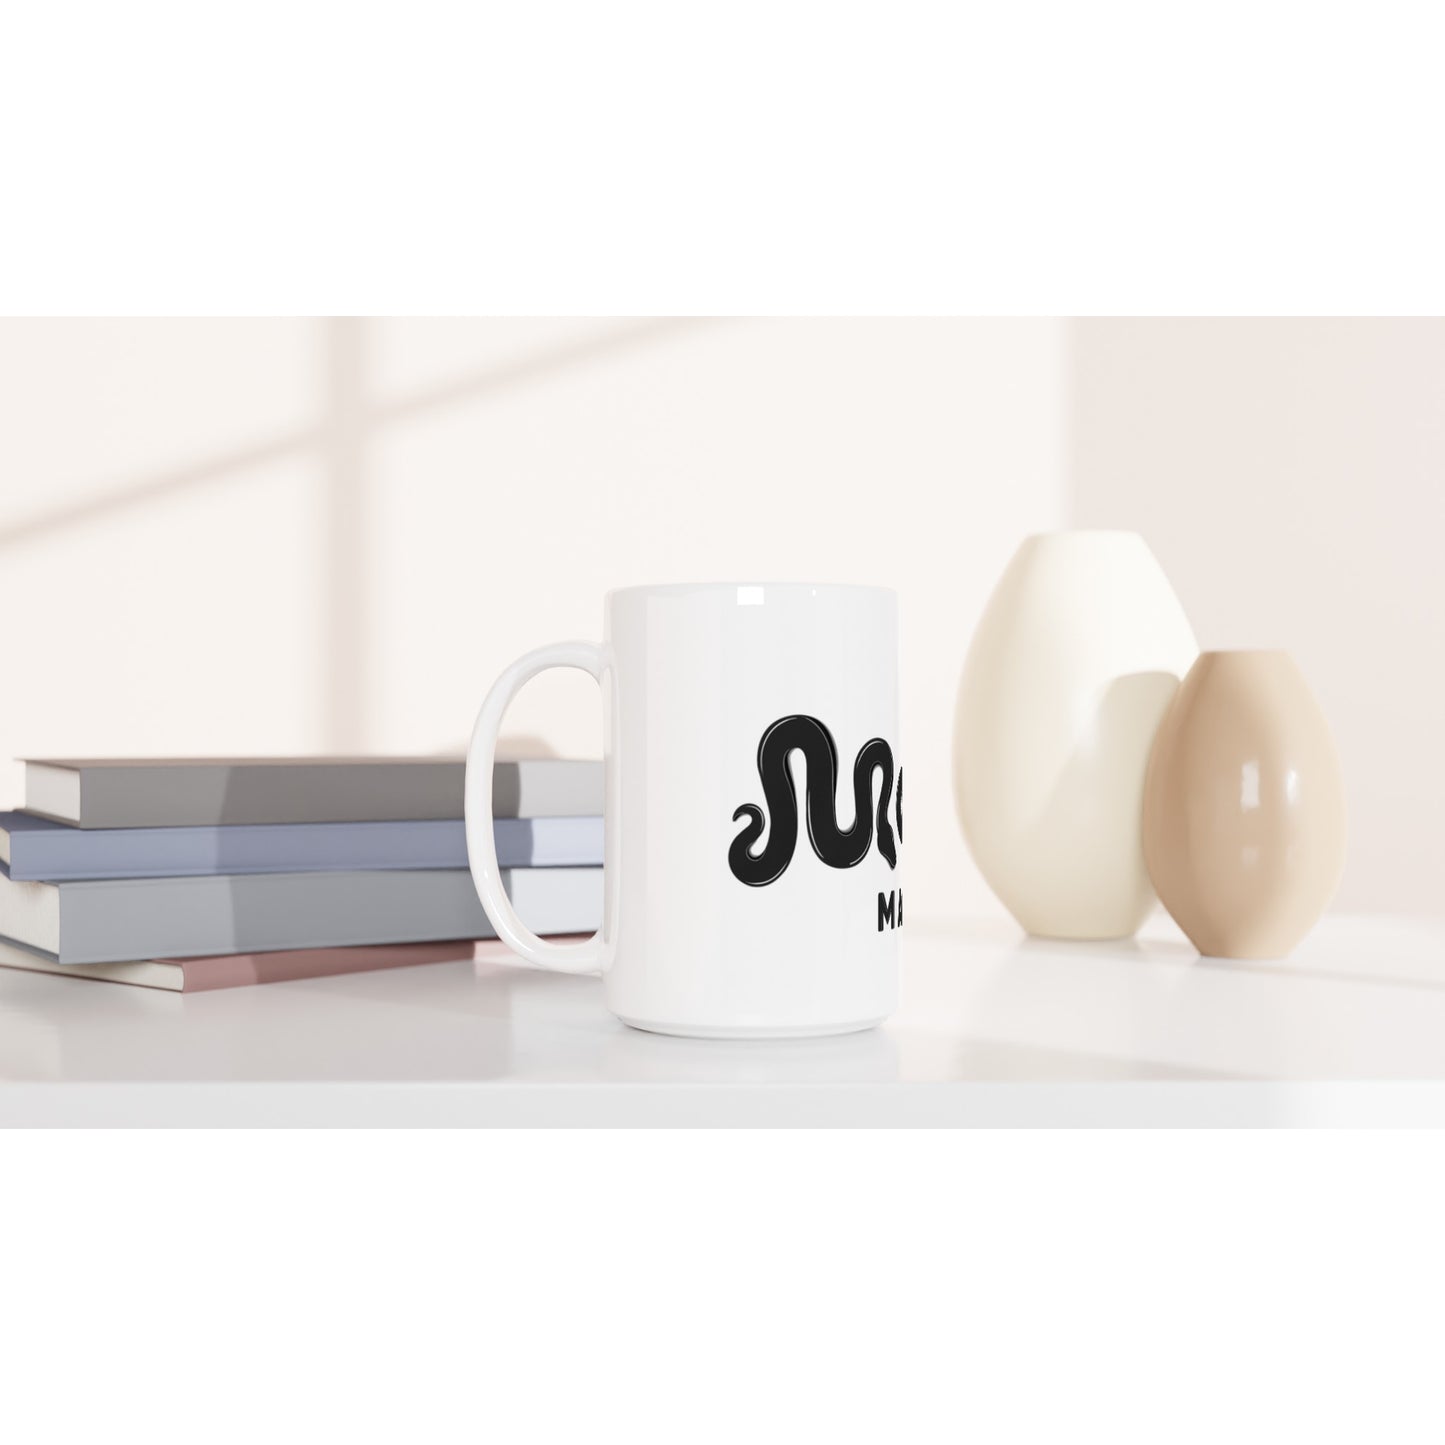 Morph Market (Dark) - White 15oz Ceramic Mug